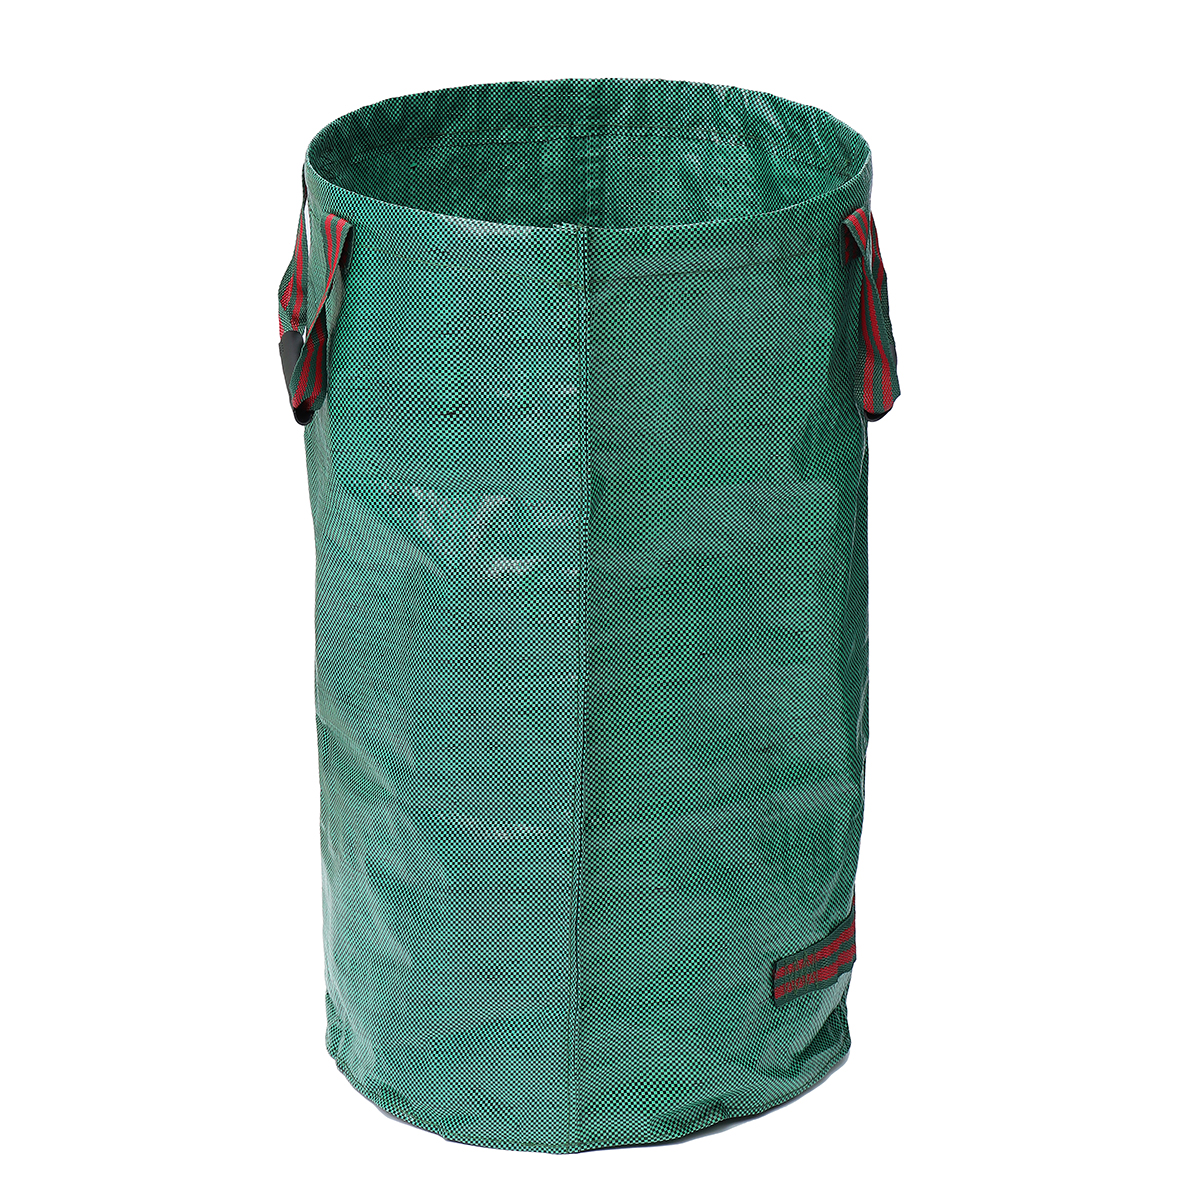 Strong-Garden-Bag-Waste-Refuse-Rubbish-Grass-Sack-Reusable-Heavy-Duty-Large-Trash-Bag-1434320-3